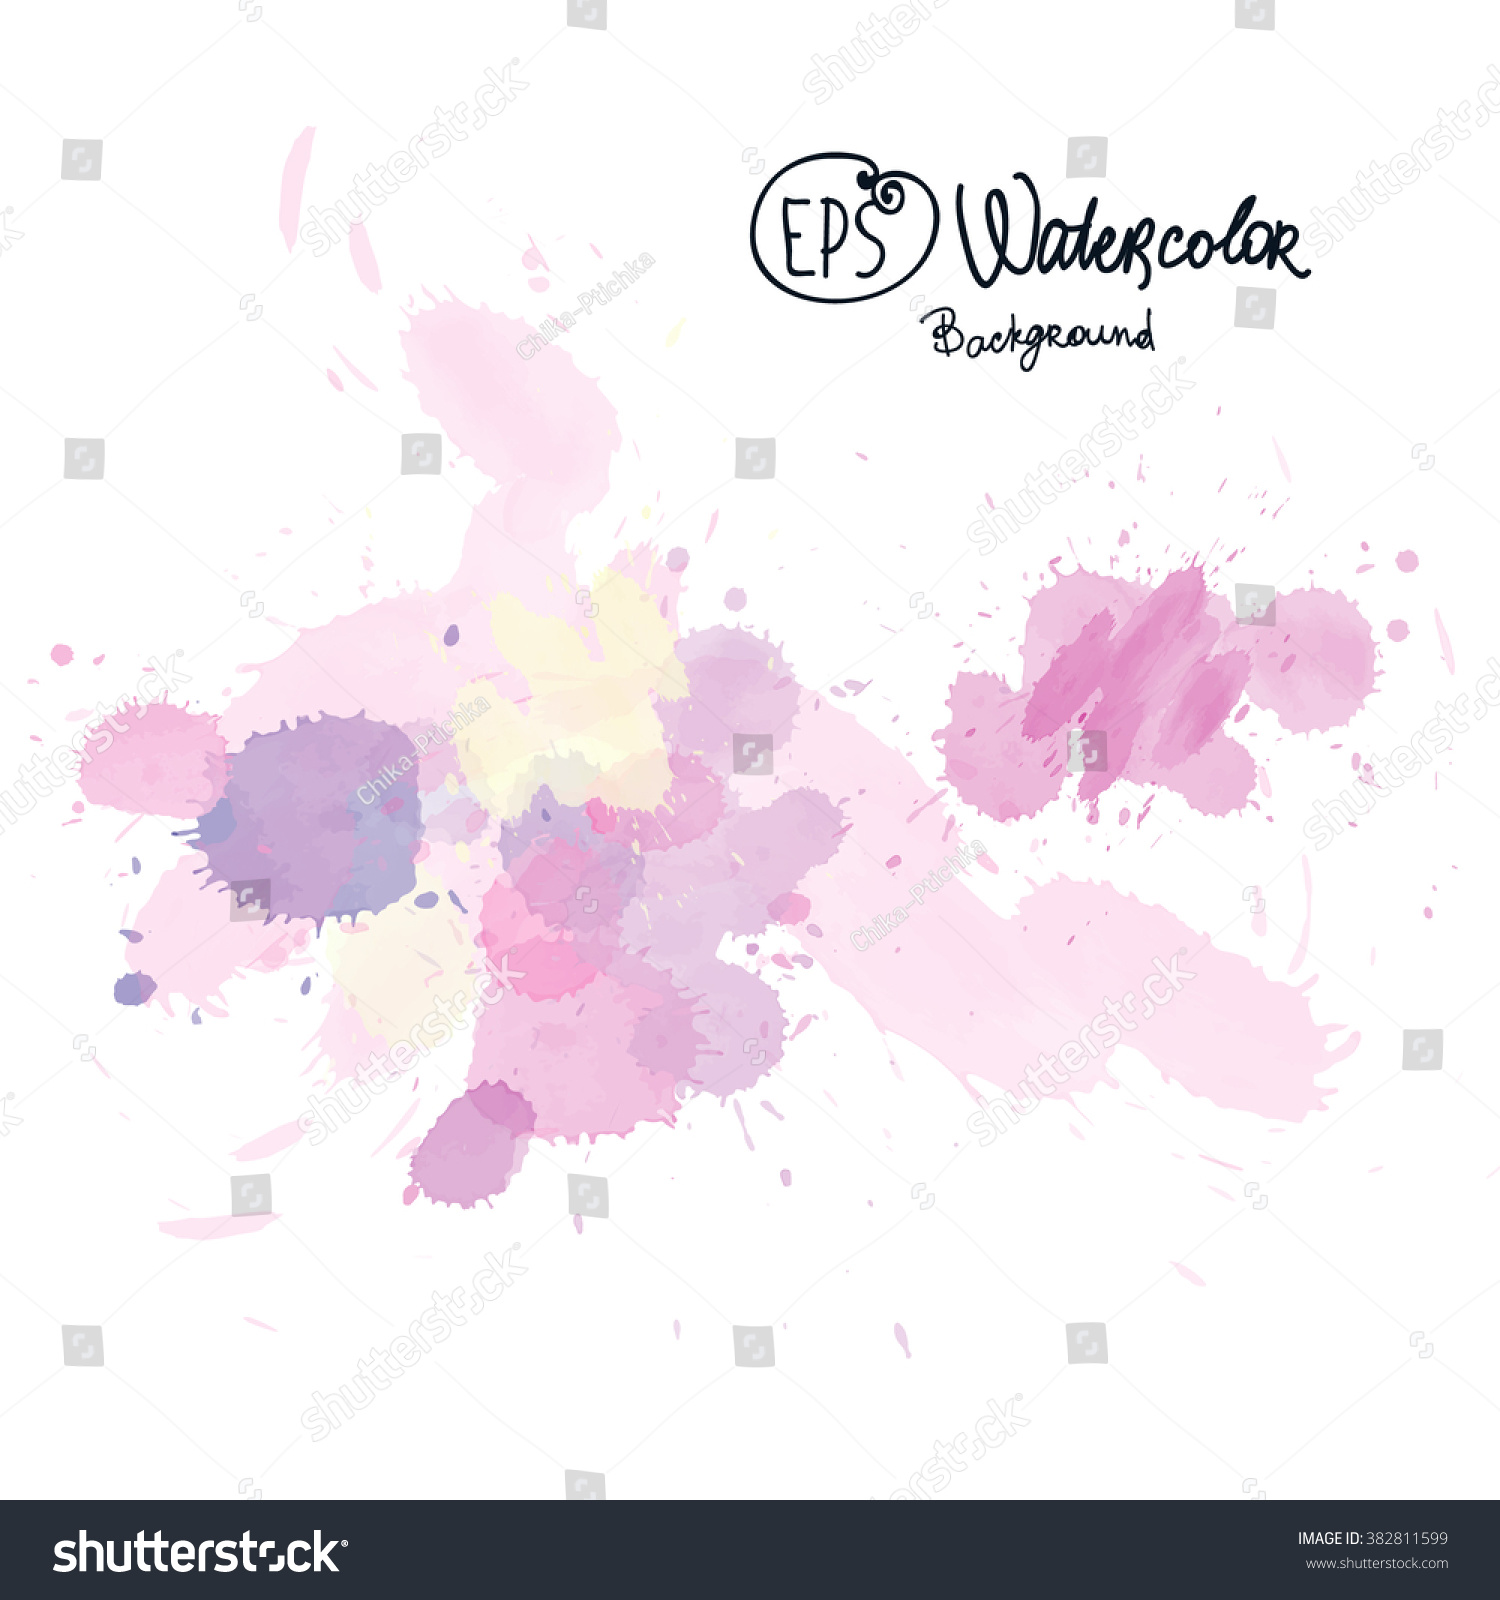 Watercolor Background Stock Vector Illustration 382811599 : Shutterstock